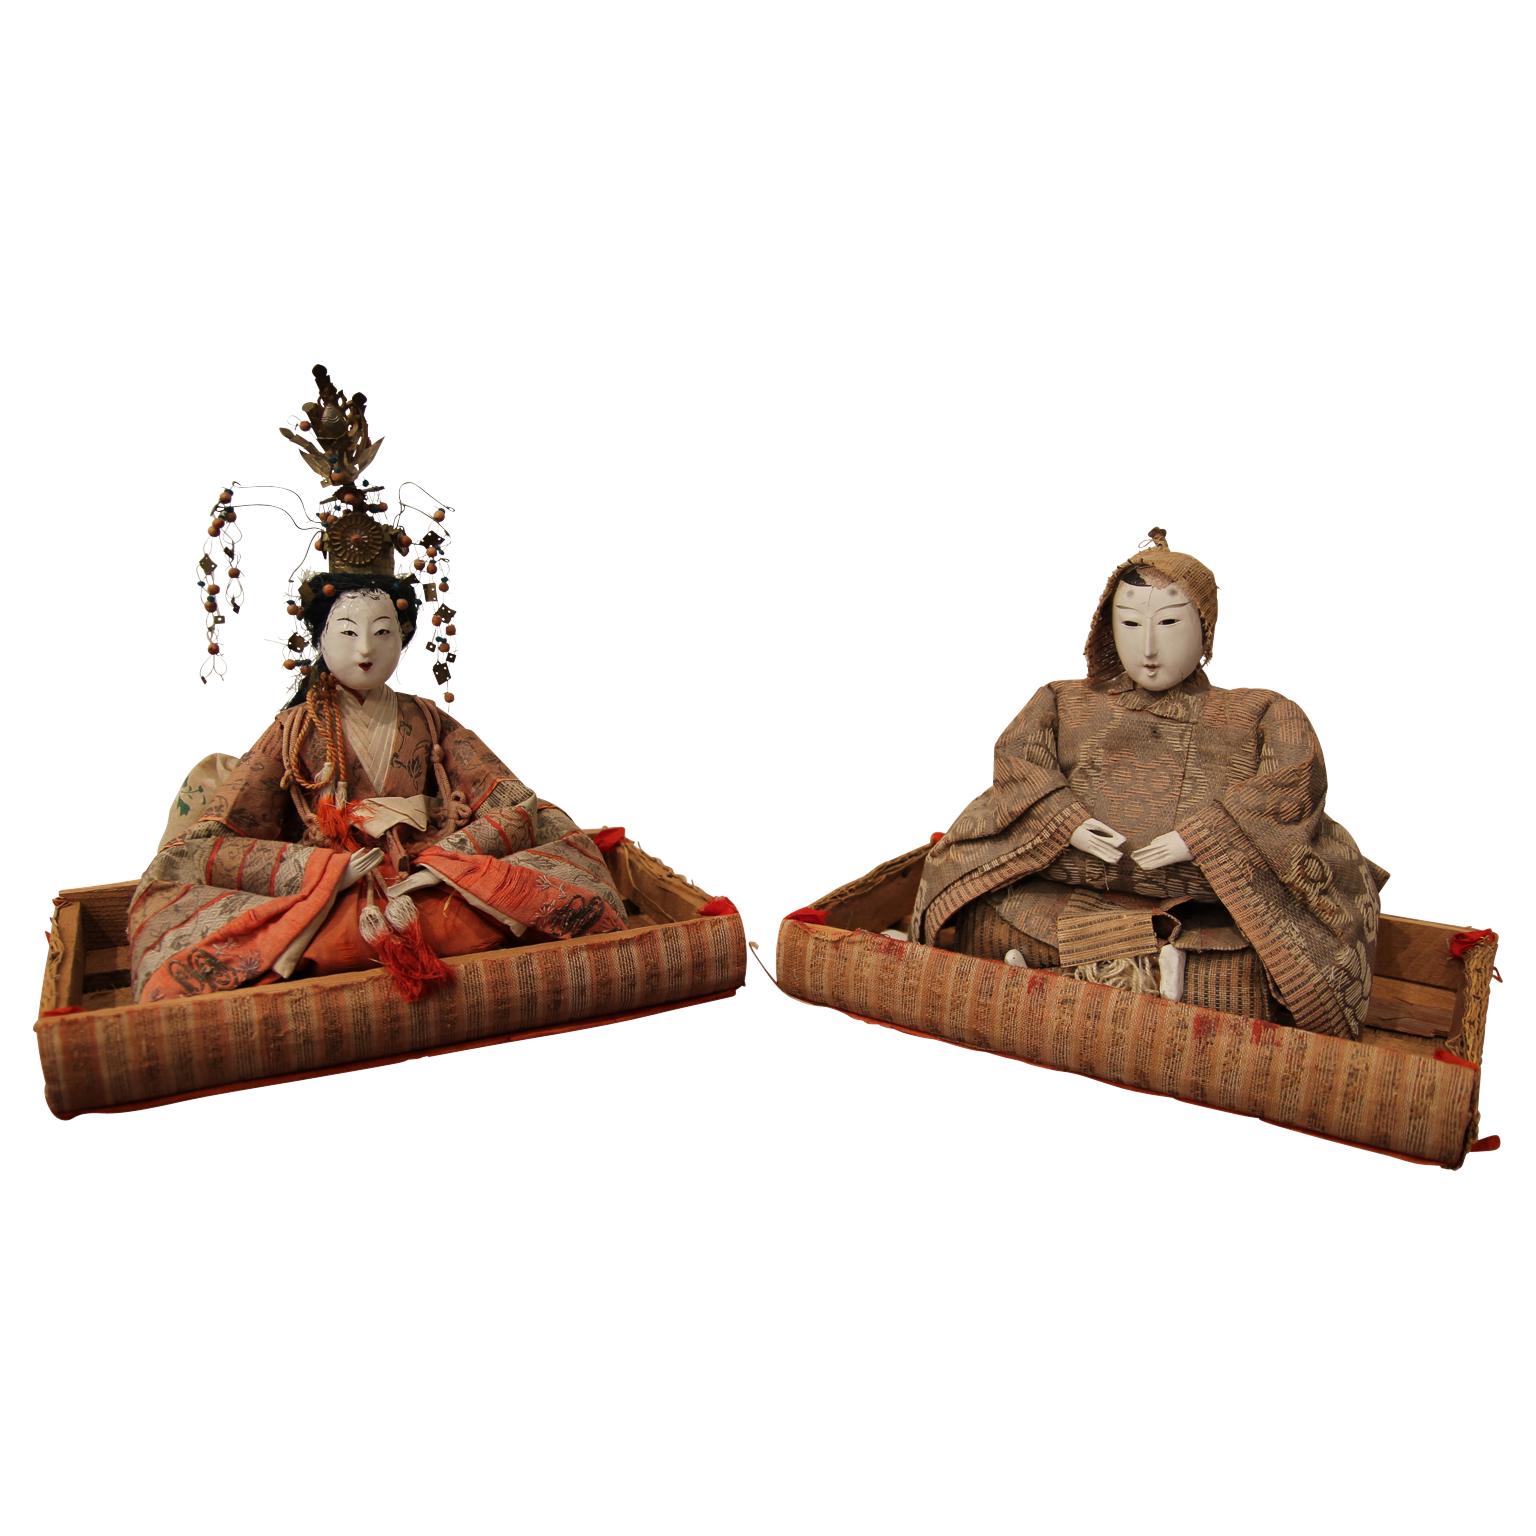 Unknown Figurative Sculpture – Hinamatsuri Festival Wooden Dolls of Princess and Prince